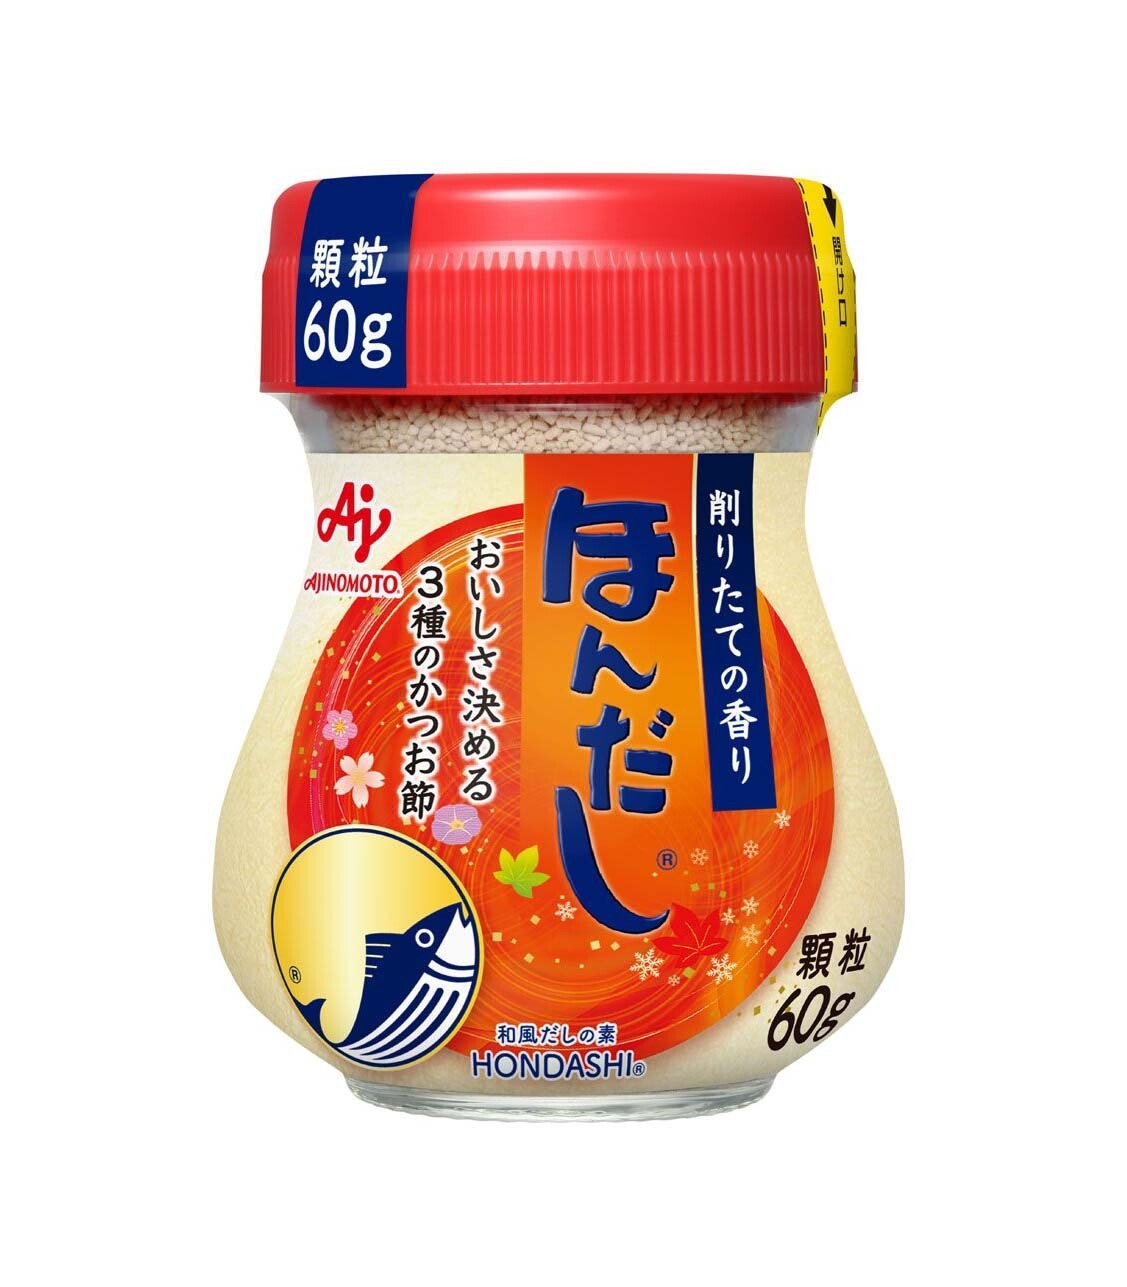 S0003 Ajinomoto Hondashi Bonito Stock Powder 60g